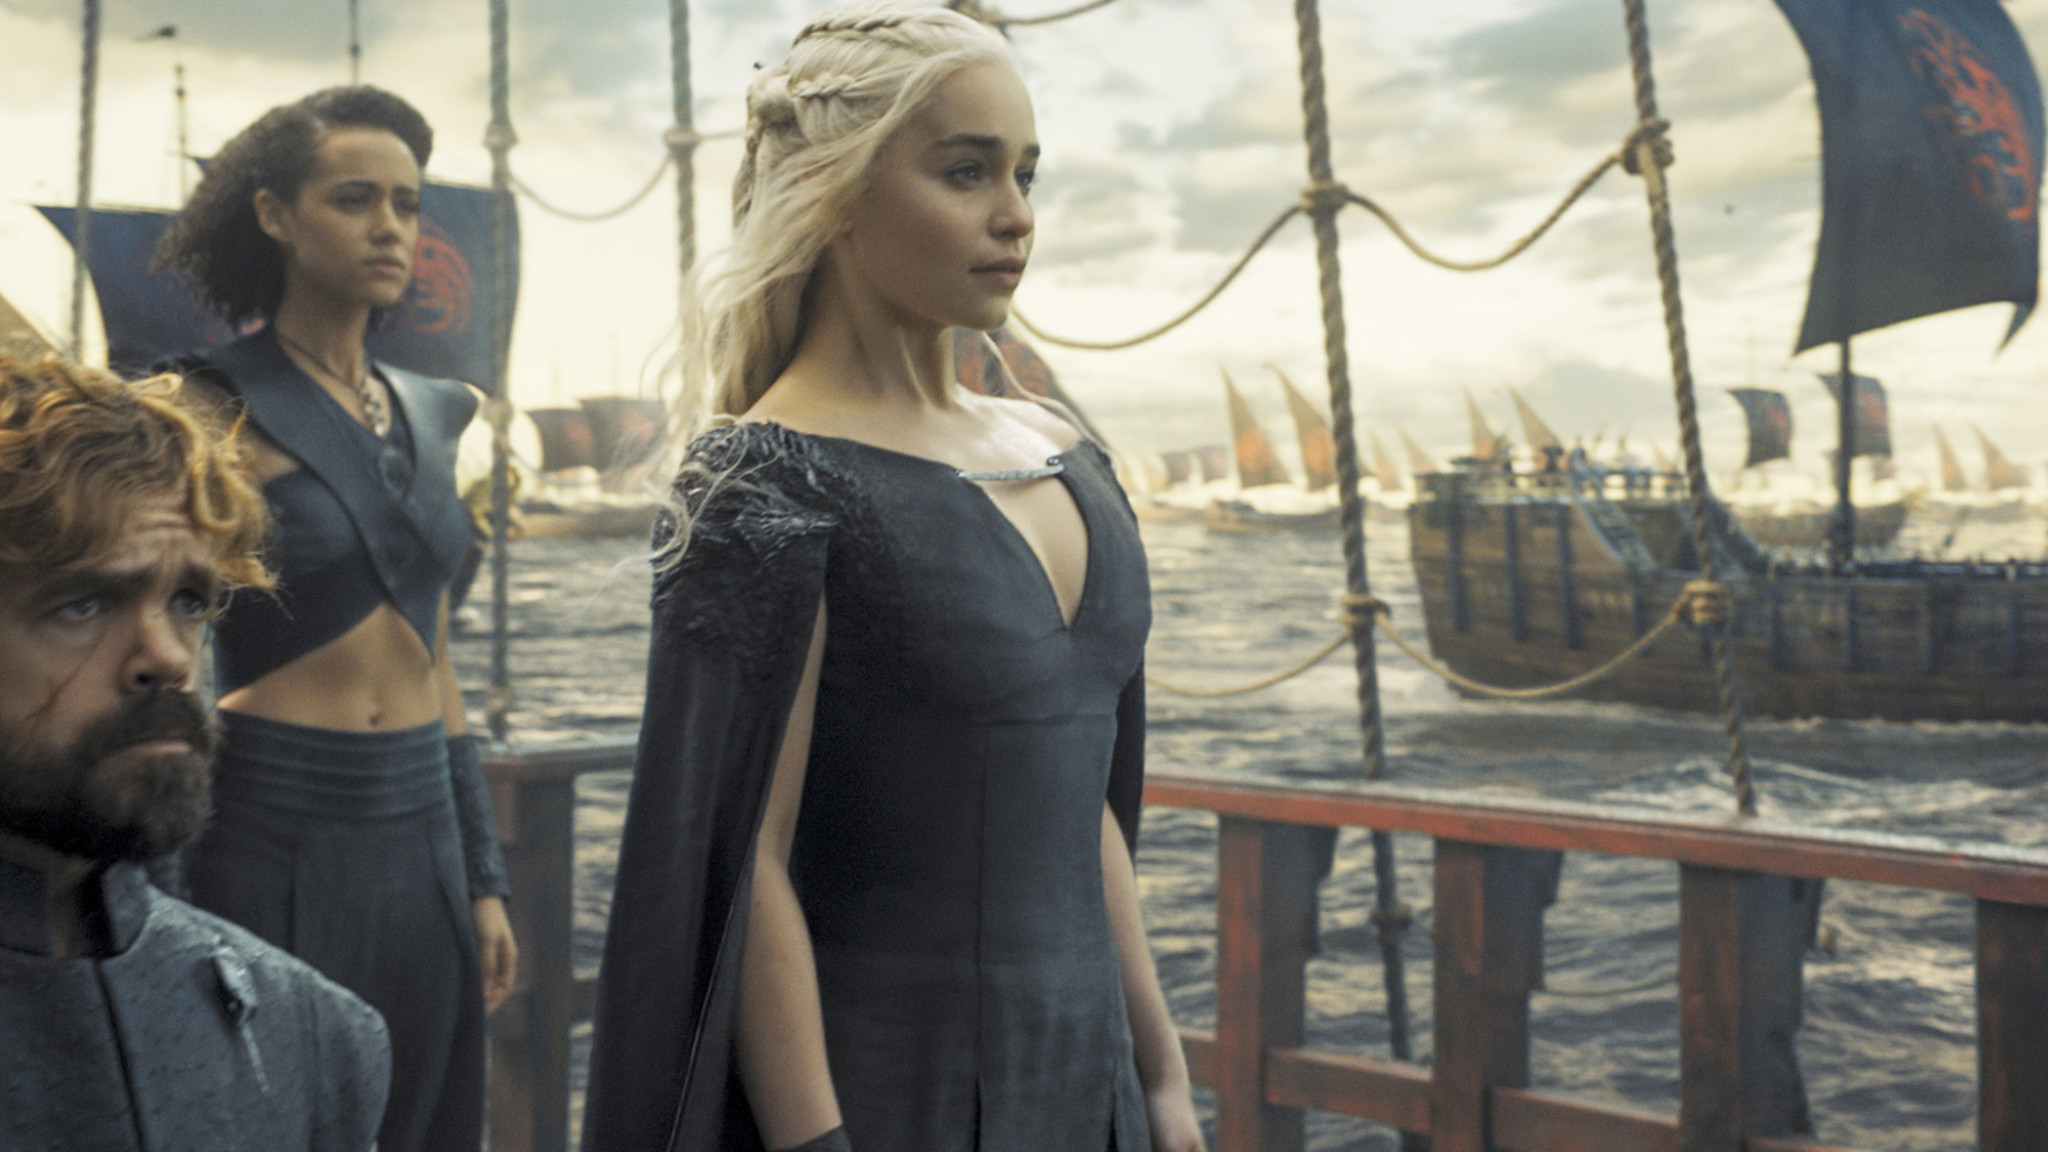 Game of Thrones - Peter Dinklage as Tyrion Lannister, Nathalie Emmanuel as Missandei, and Emilia Clarke as Daenerys Targaryen